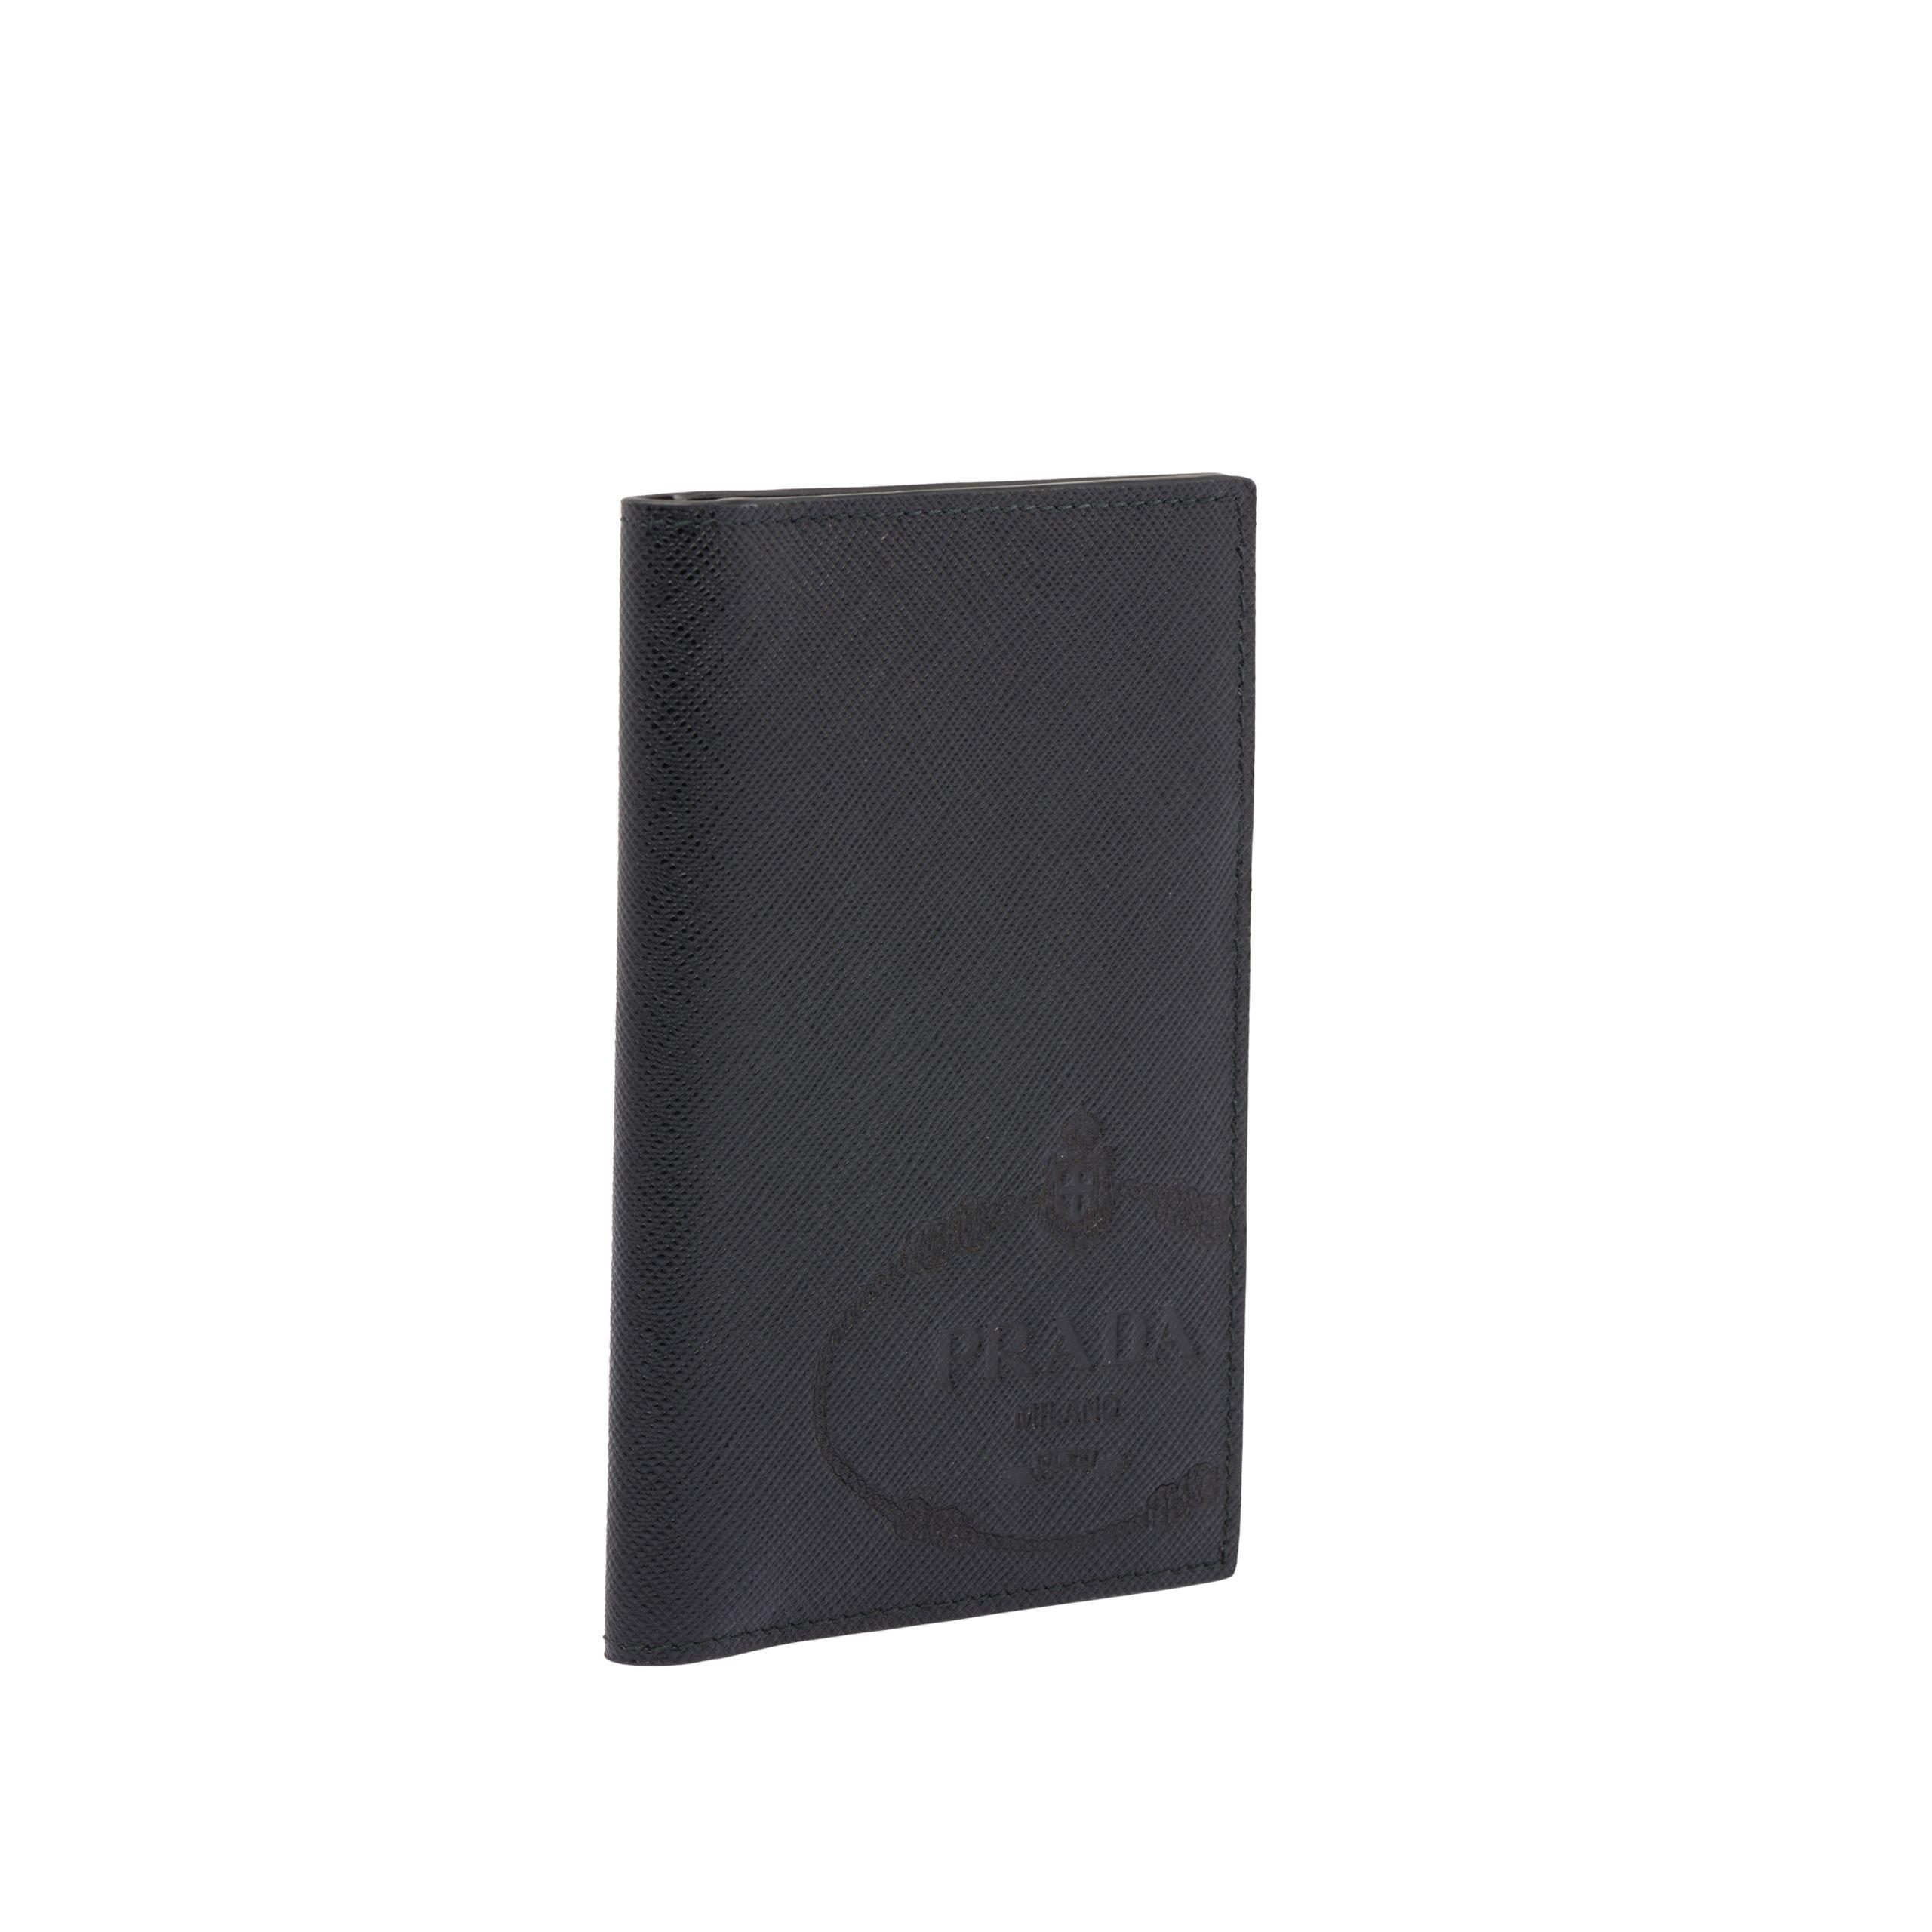 Prada Saffiano Leather Passport Holder in Black for Men - Lyst